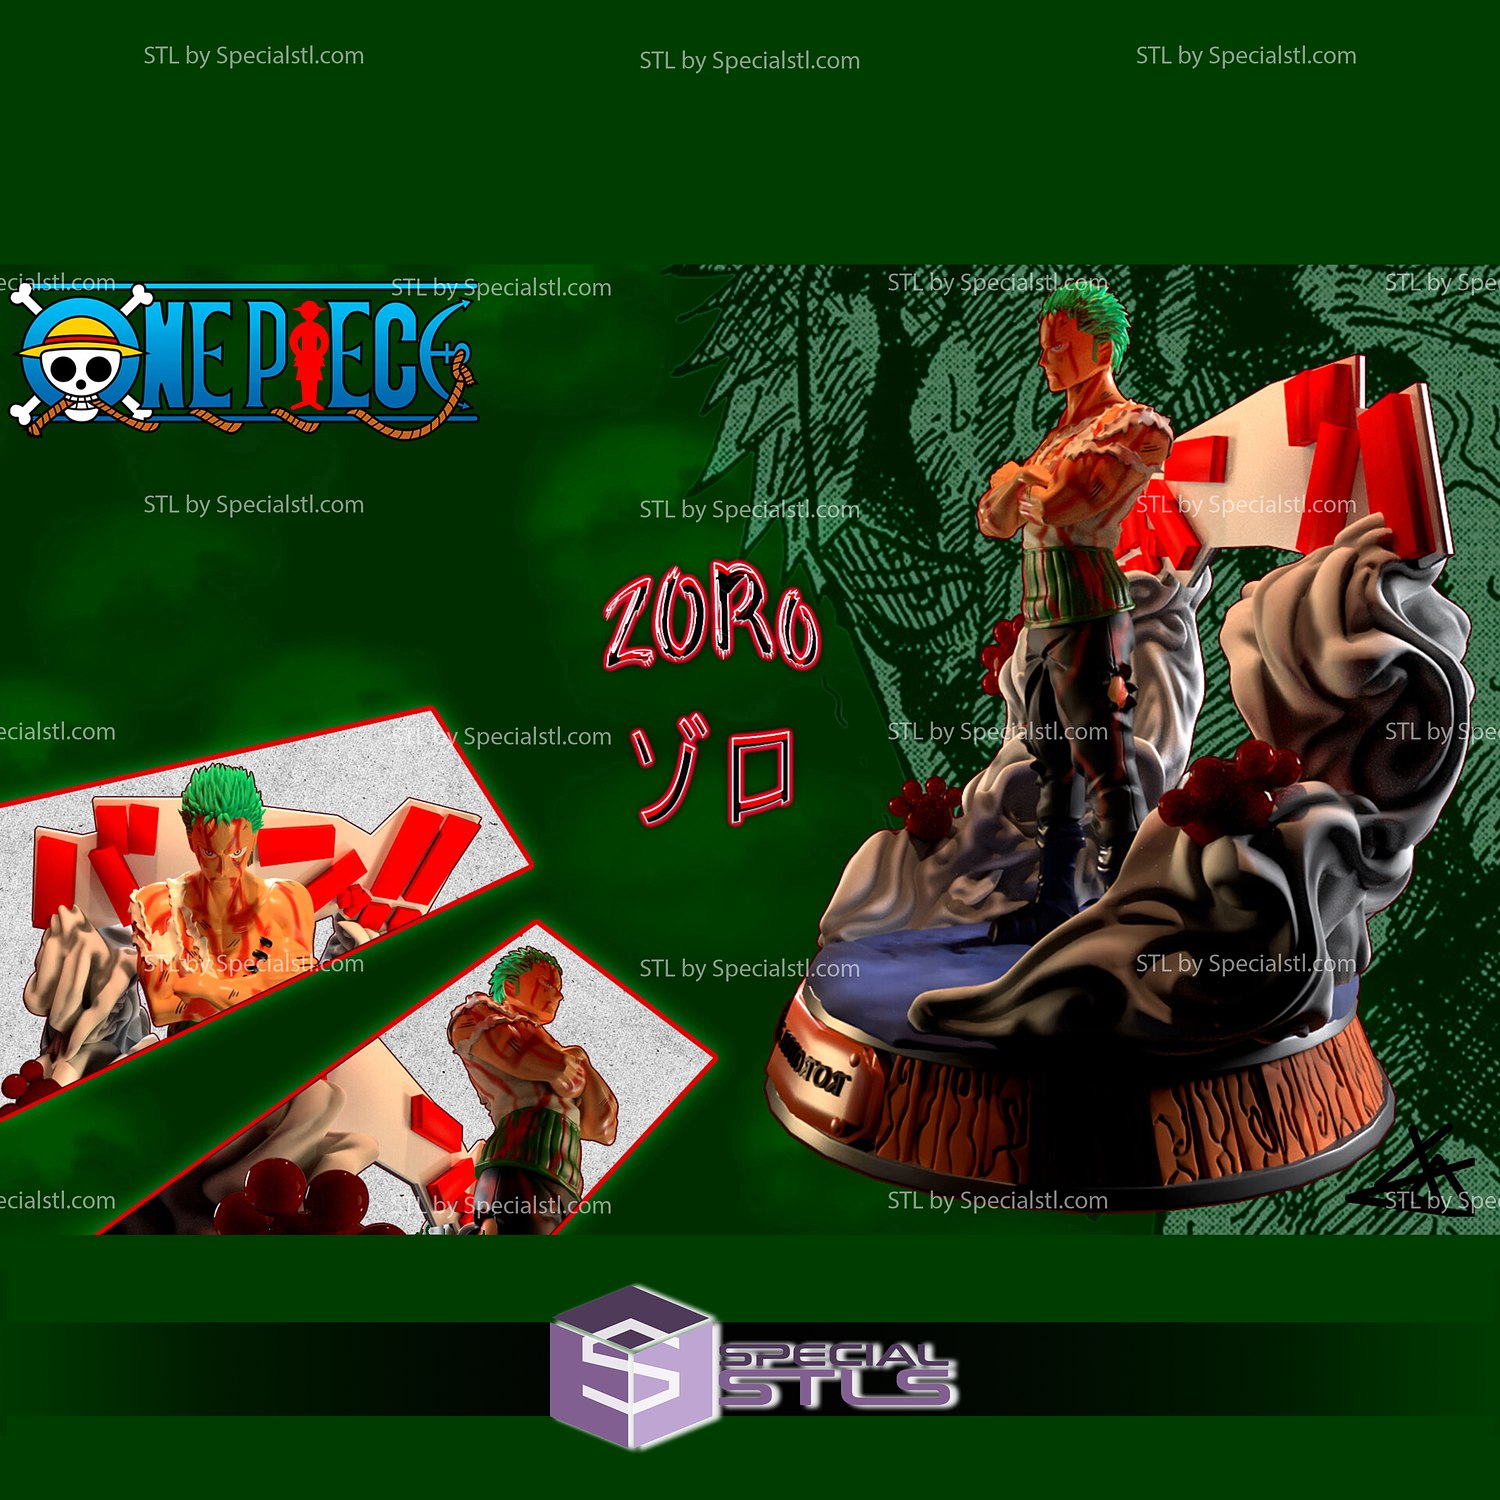 Roronoa Zoro Sacrifice - One Piece Figure